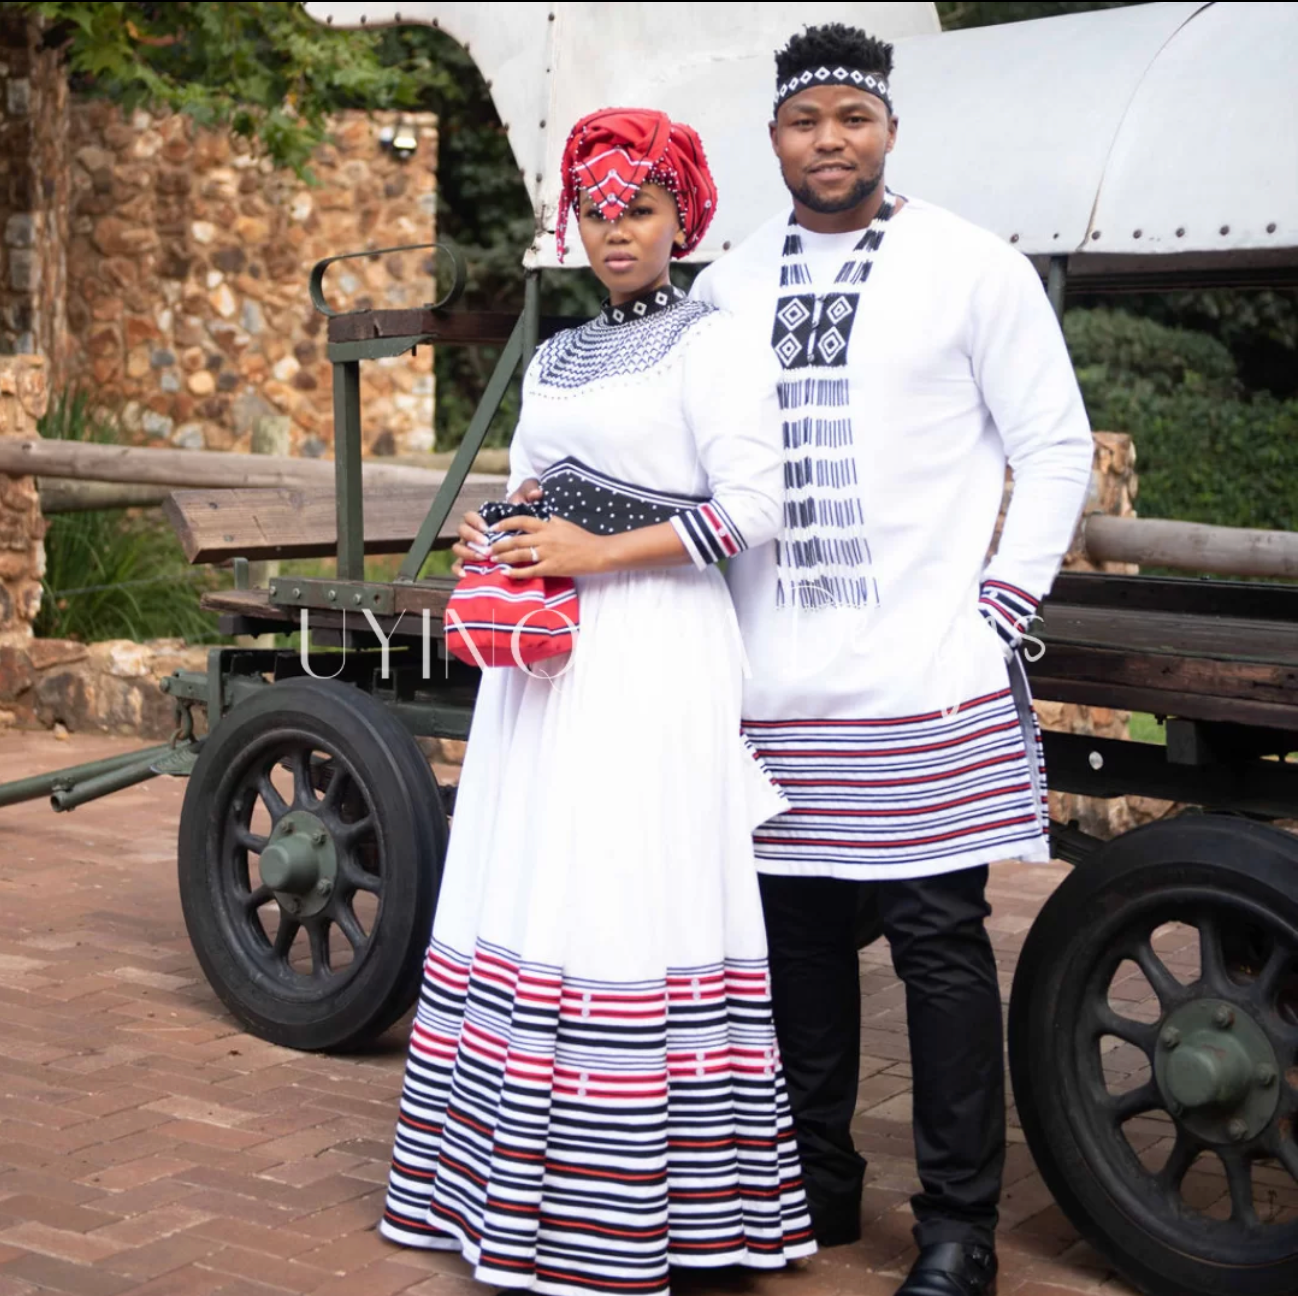 White Makoti and Mkhwenyana Wedding Ensemble